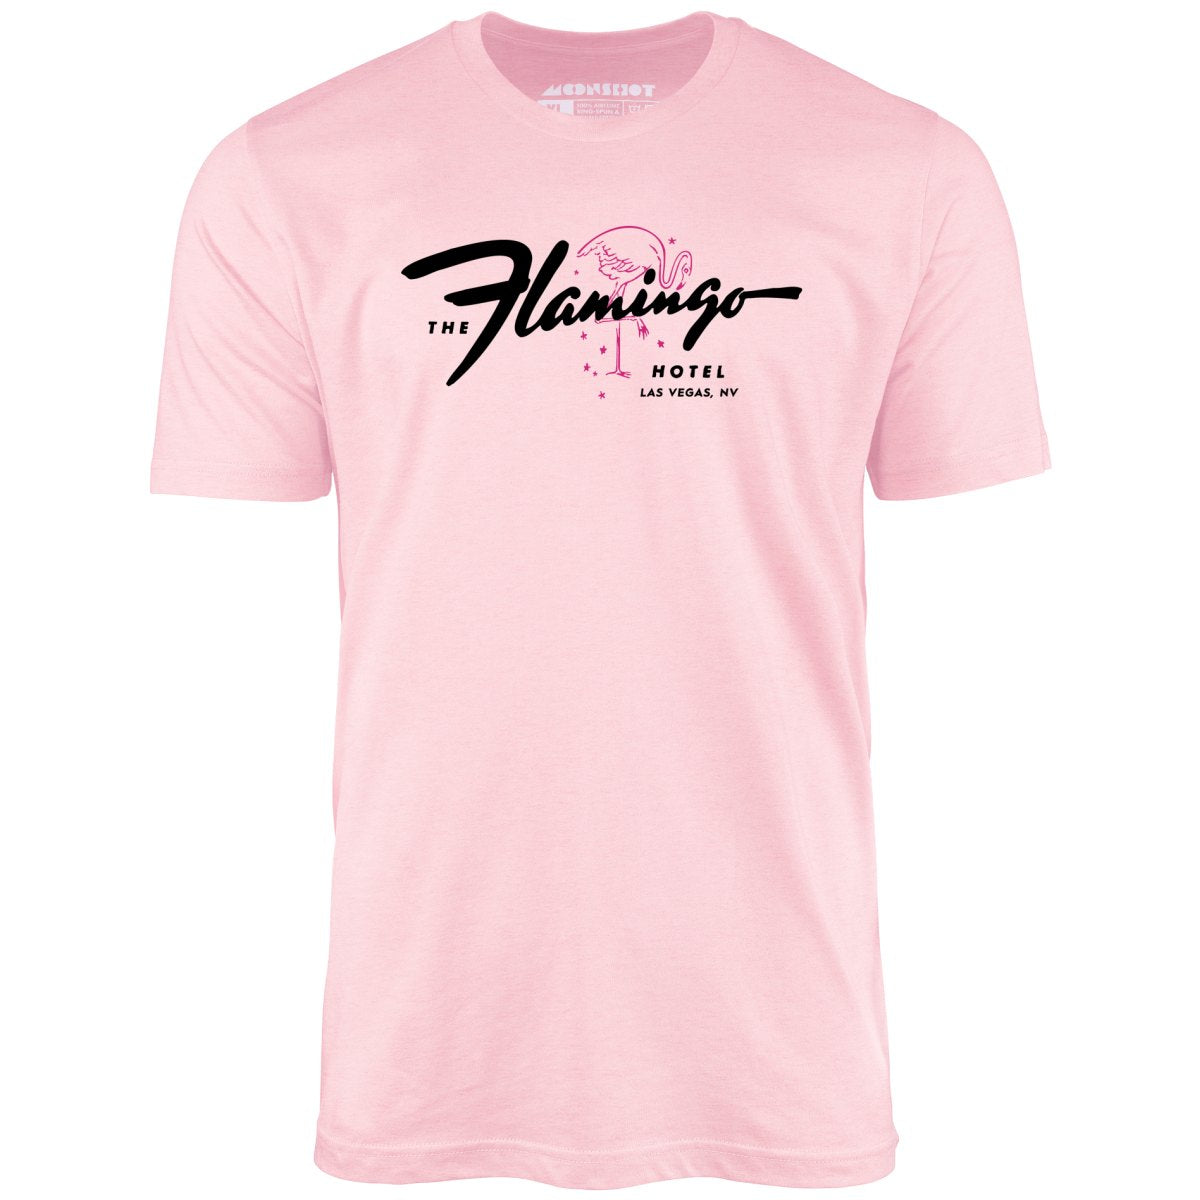 The Flamingo Hotel - Vintage Las Vegas - Unisex T-Shirt